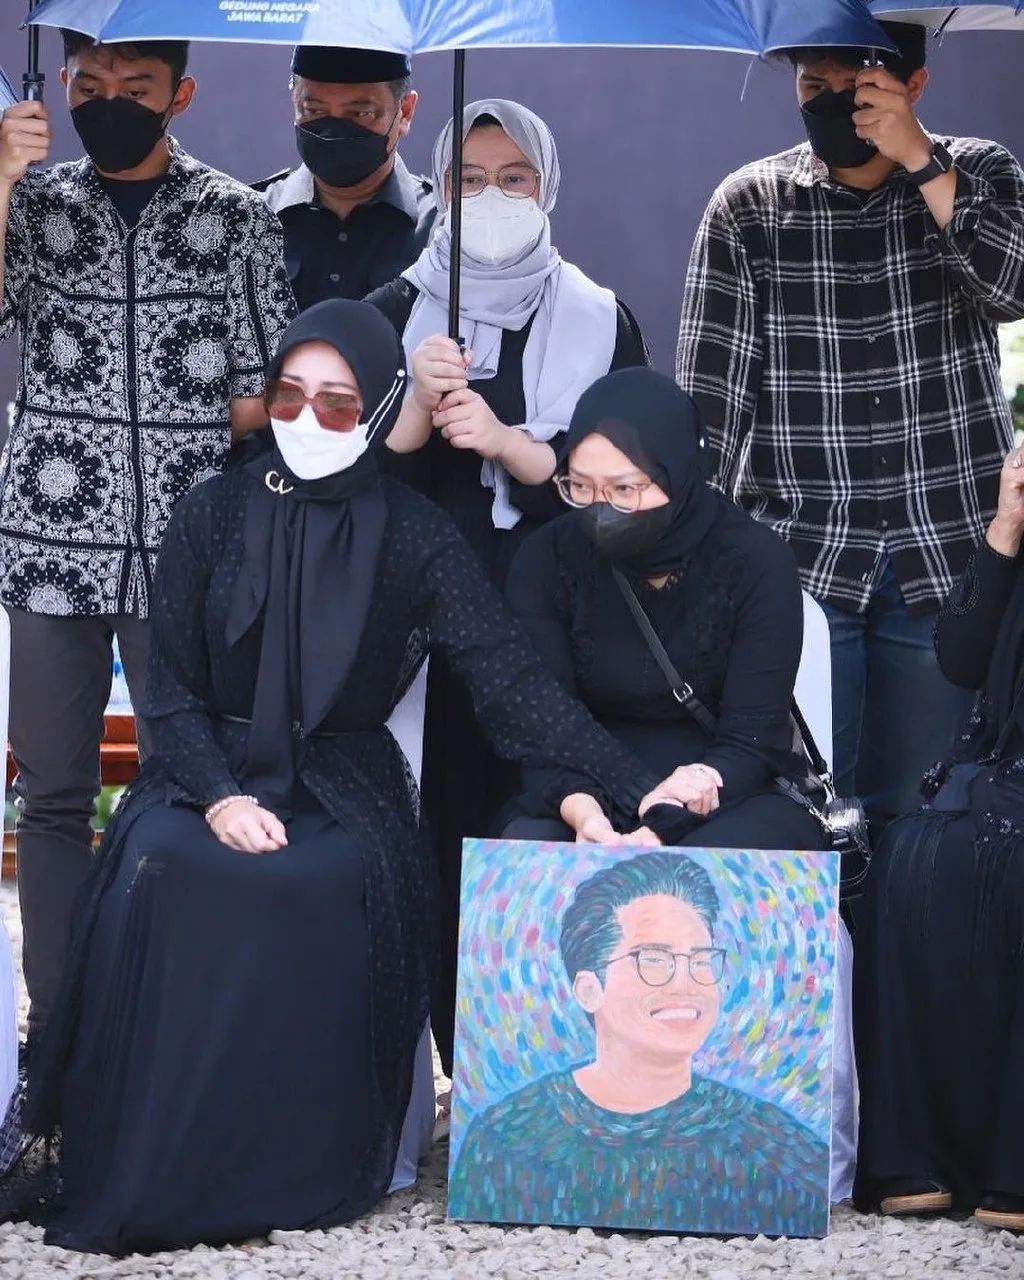 Ridwan Kamil dan Keluarga Diundang Pemerintah Arab Saudi Haji Gratis, Atalia: Balasan Atas Amalan Eril